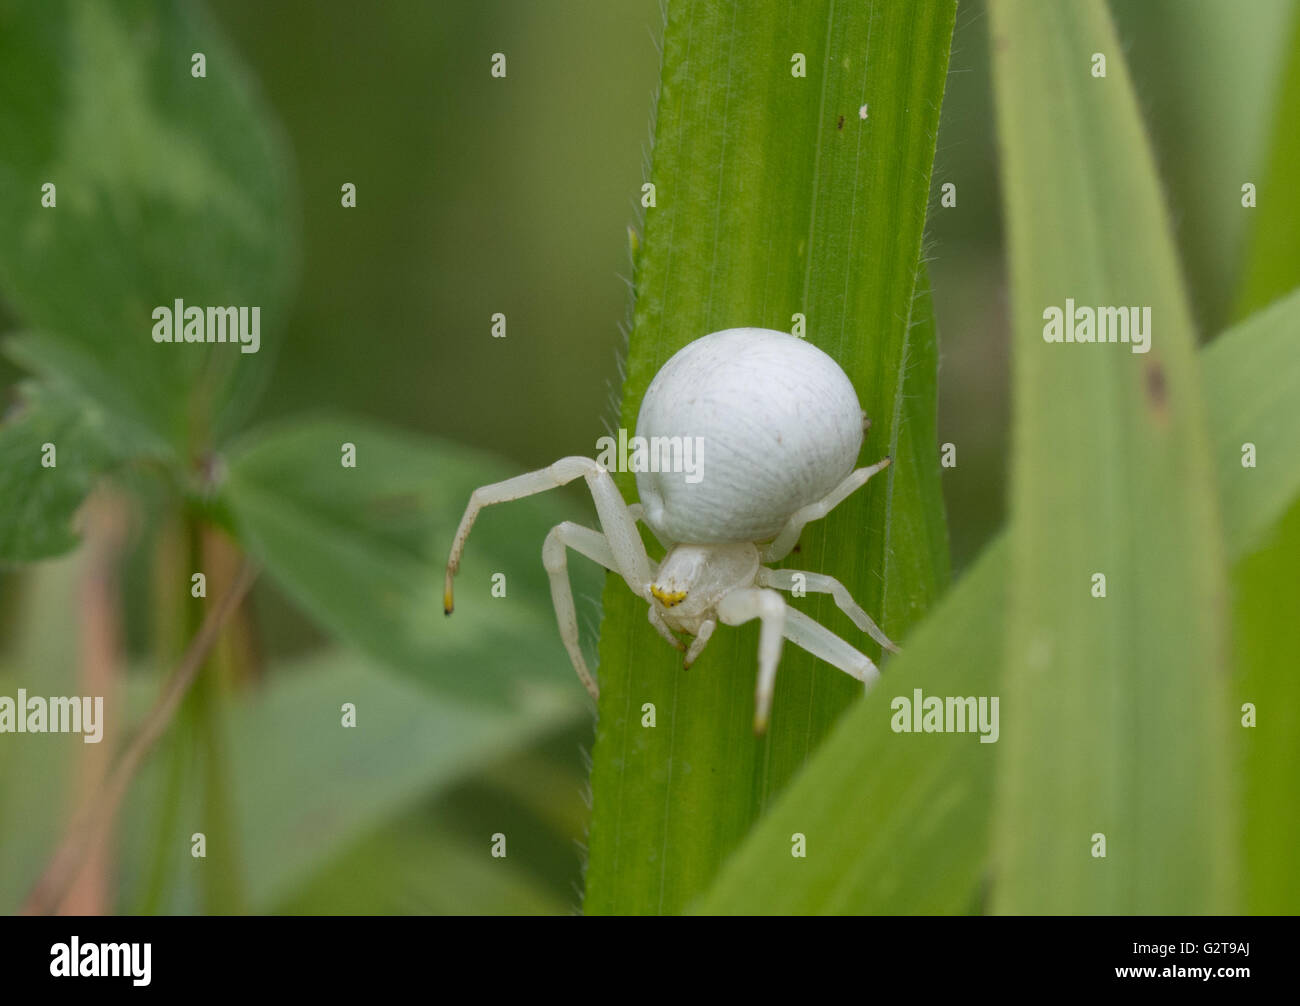 Goldenrod crab spider (Misumena vatia) on grass, UK Stock Photo